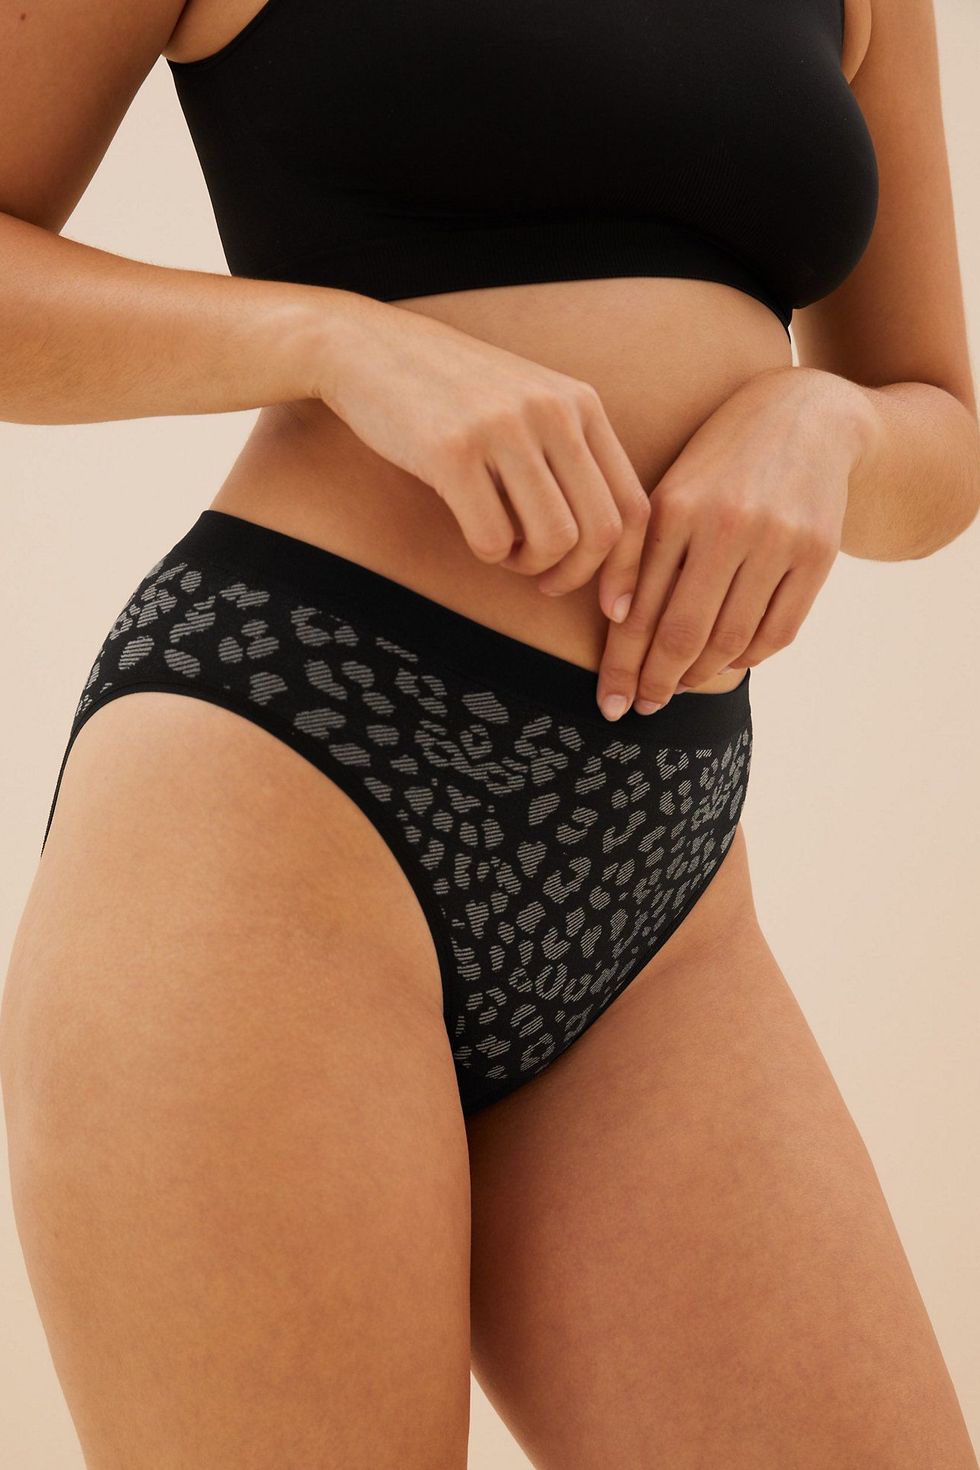 M&S Underwear Firm Control High Rise Waist Cincher Knickers Size